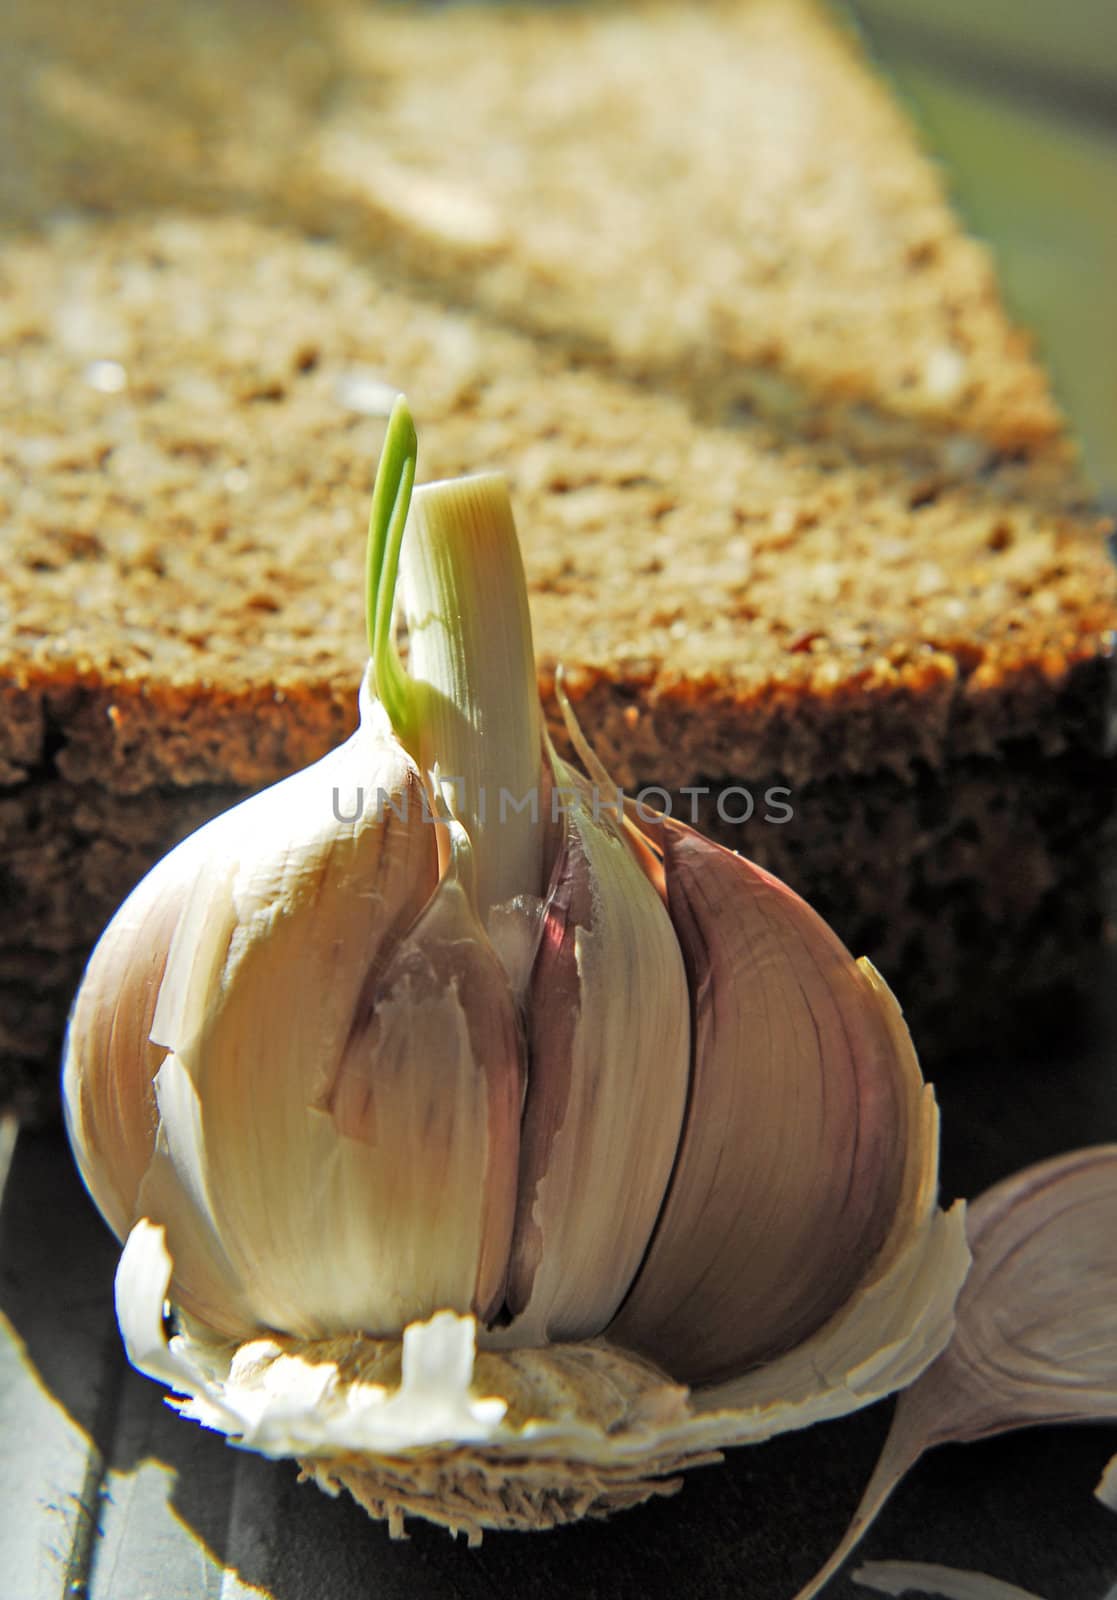 garlic and bread